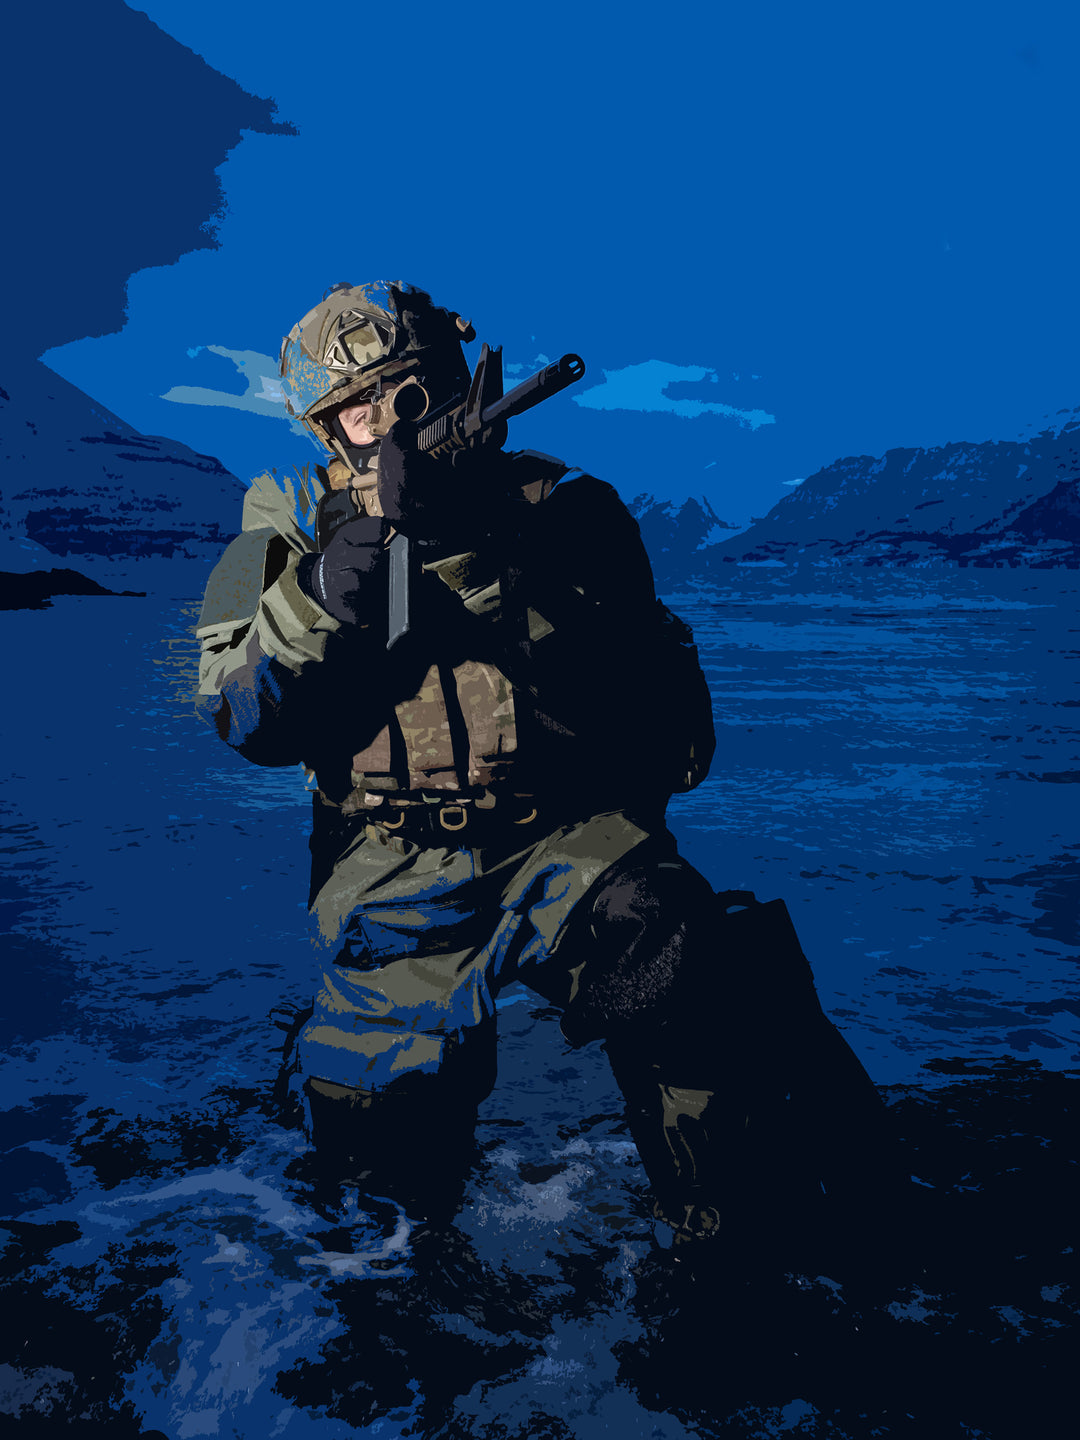 Royal Marines Commando at Dusk artwork Print - Canvas - Framed Print - Hampshire Prints